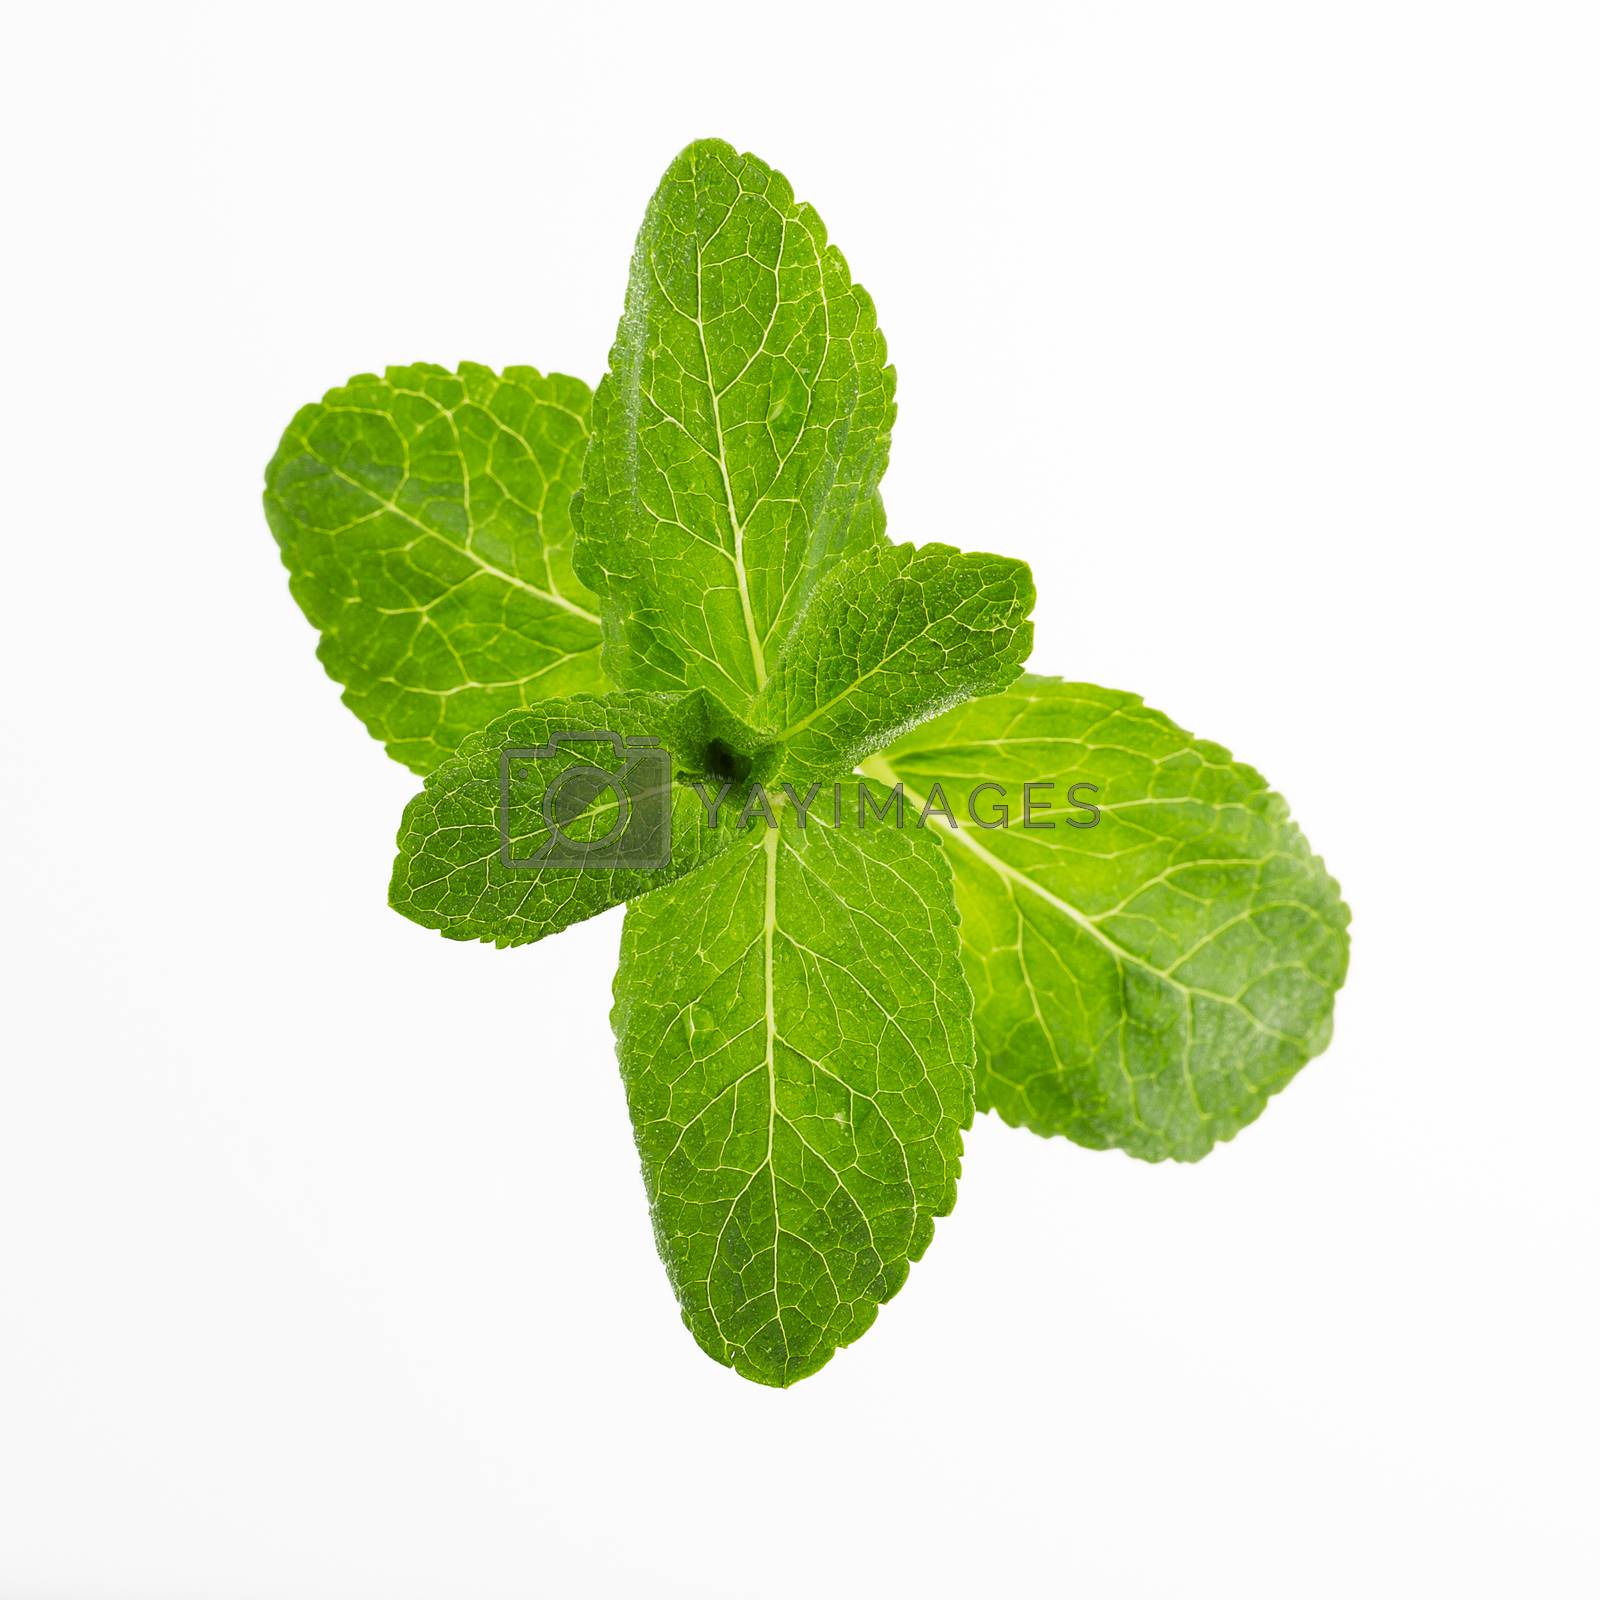 Royalty free image of Fresh Mint Leaves by charlotteLake